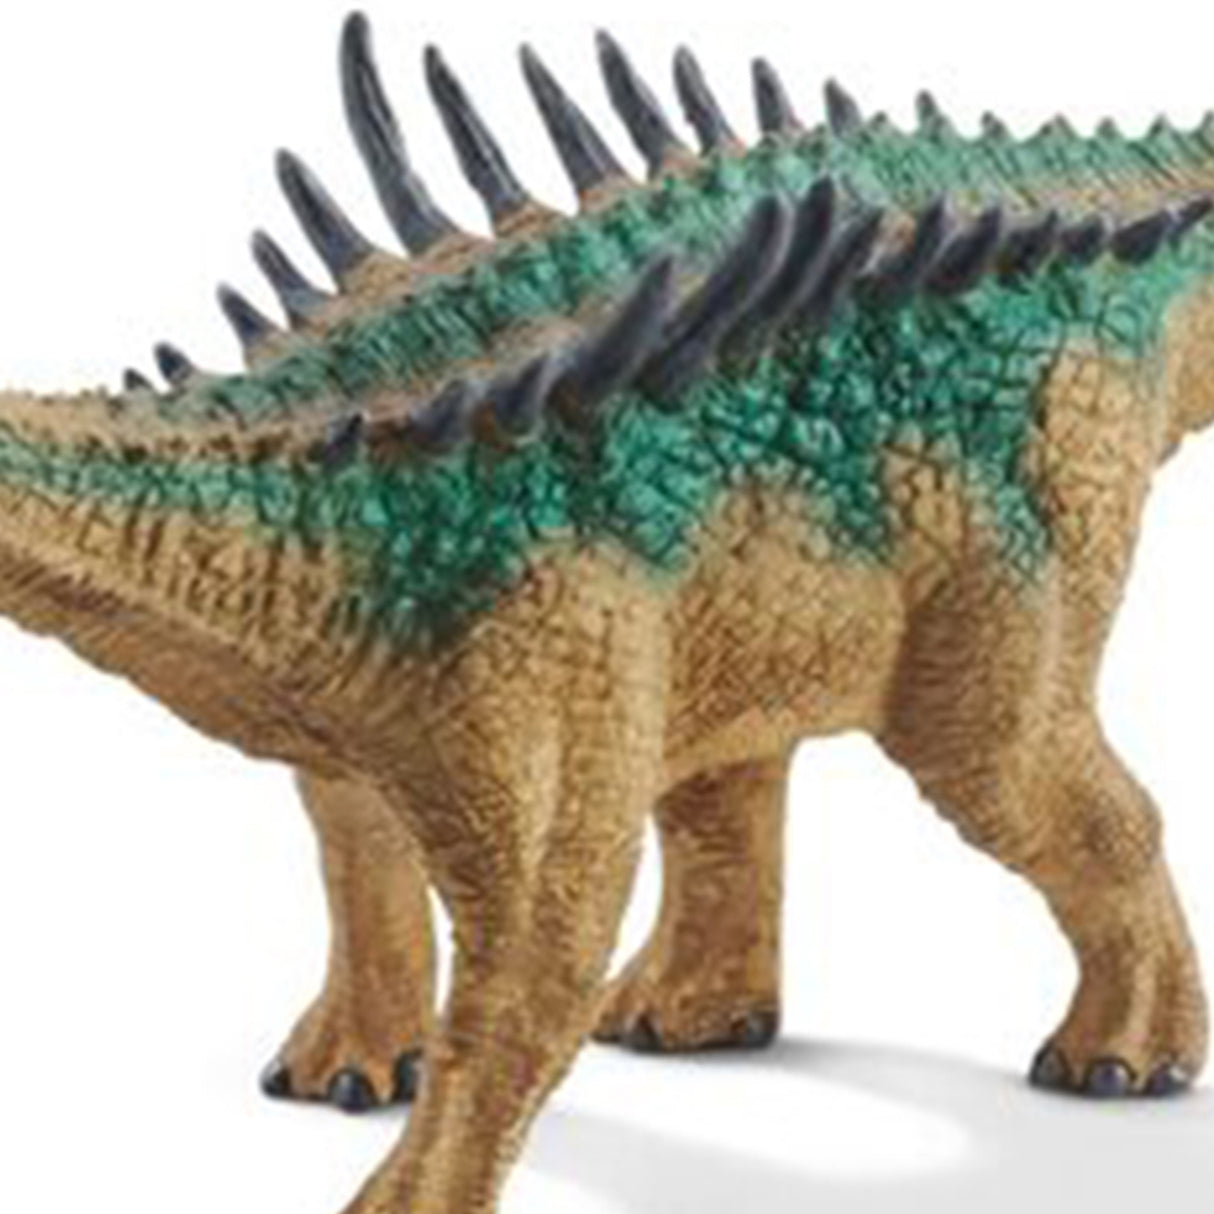 Schleich Agustinia 15021 Dinosaur Animal Collectible Figurine Model Toy Figure